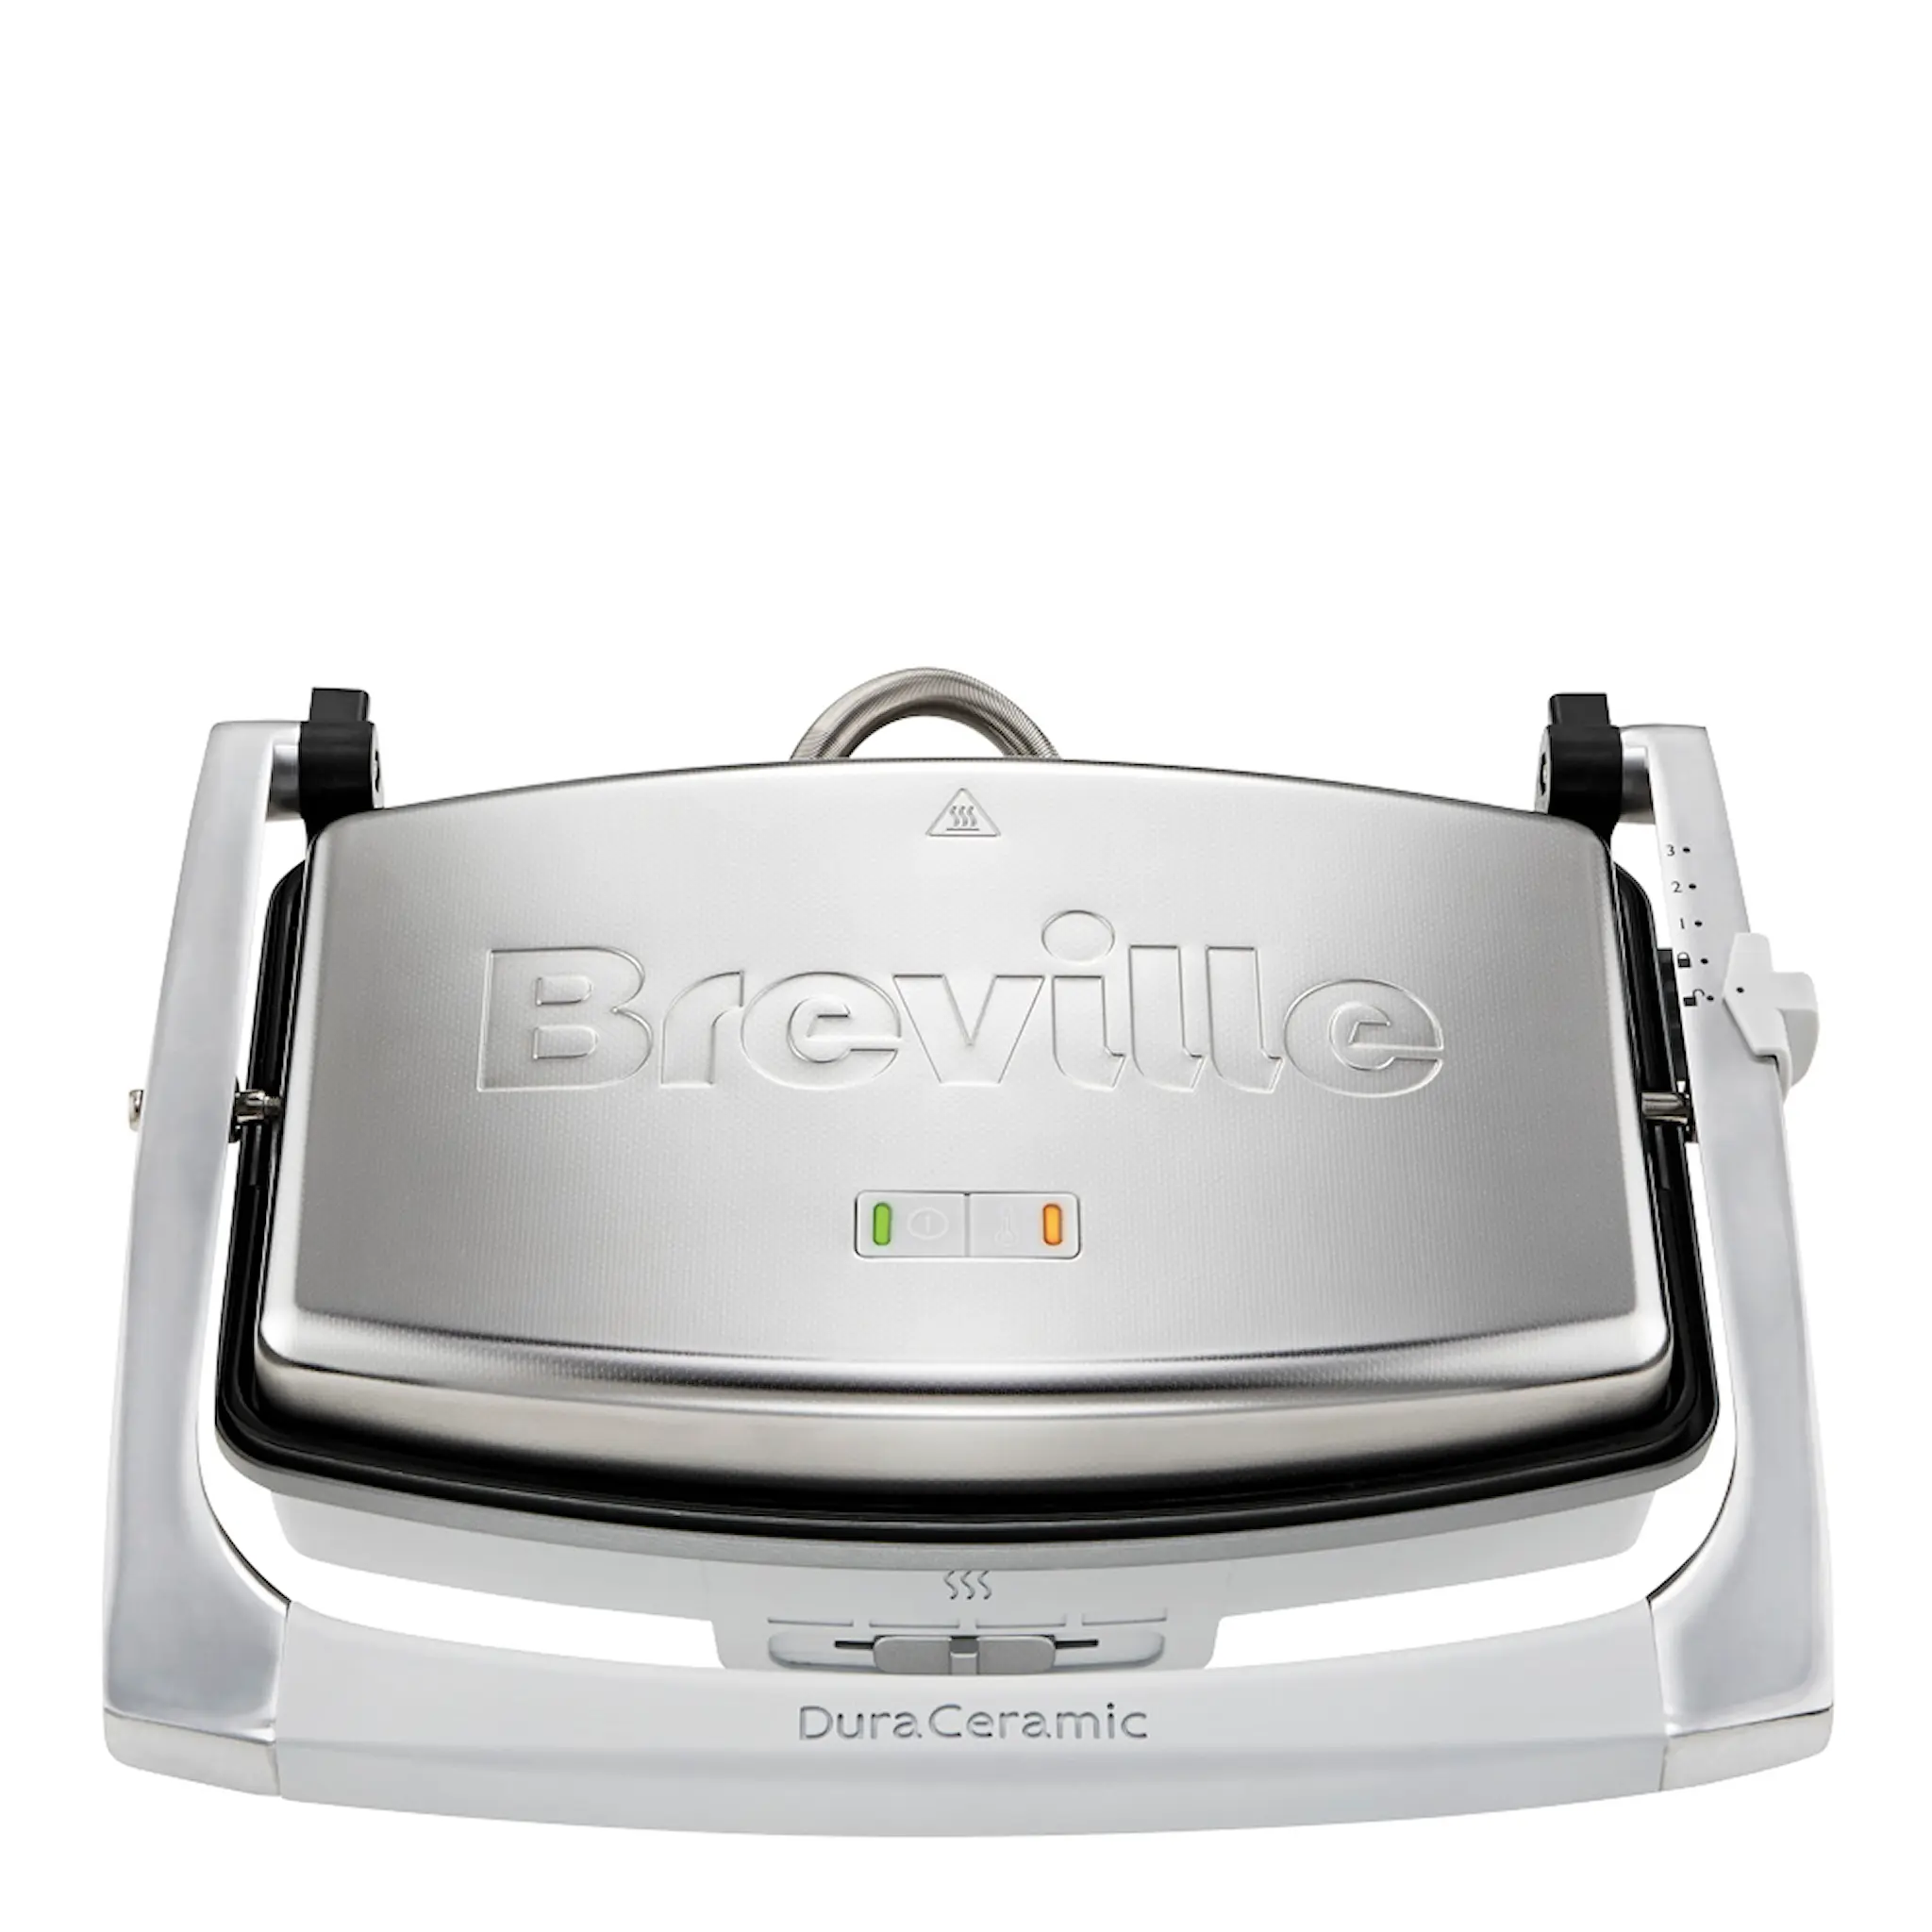 Breville Duraceramic paninigrill 3 skiver